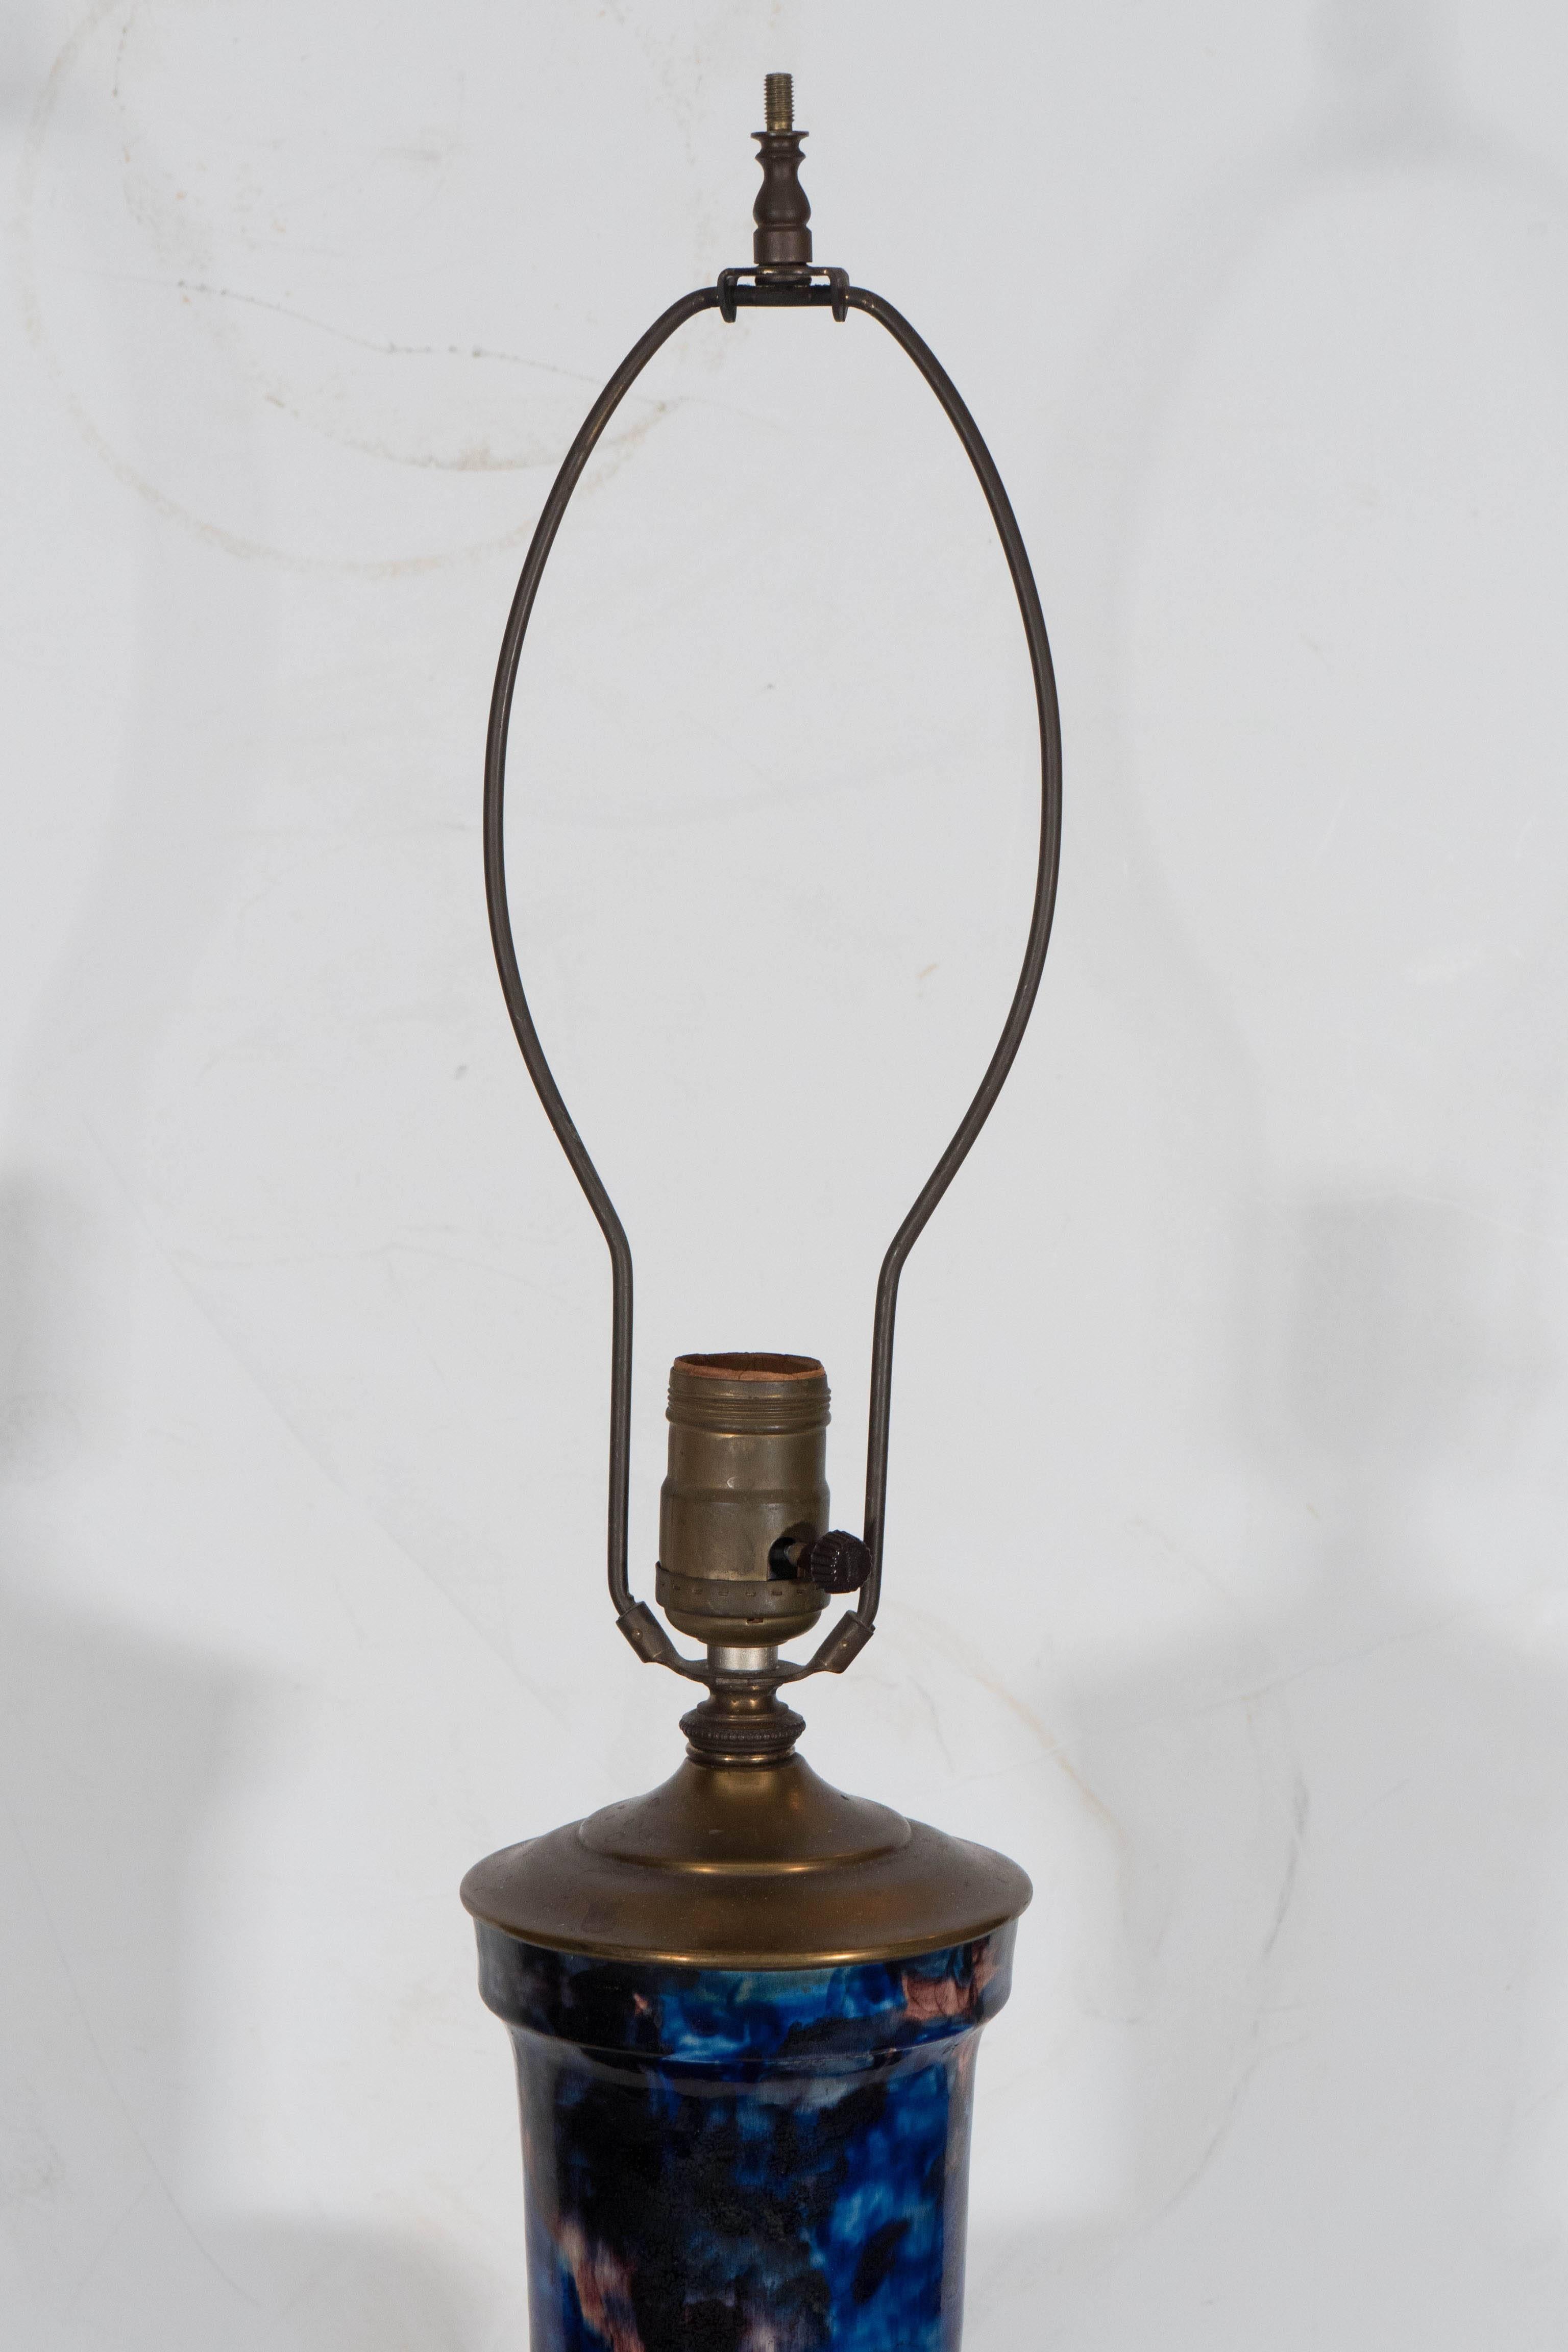 Brass Midcentury Hand-Painted Ceramic Vase Lamp in Cobalt and Mauve